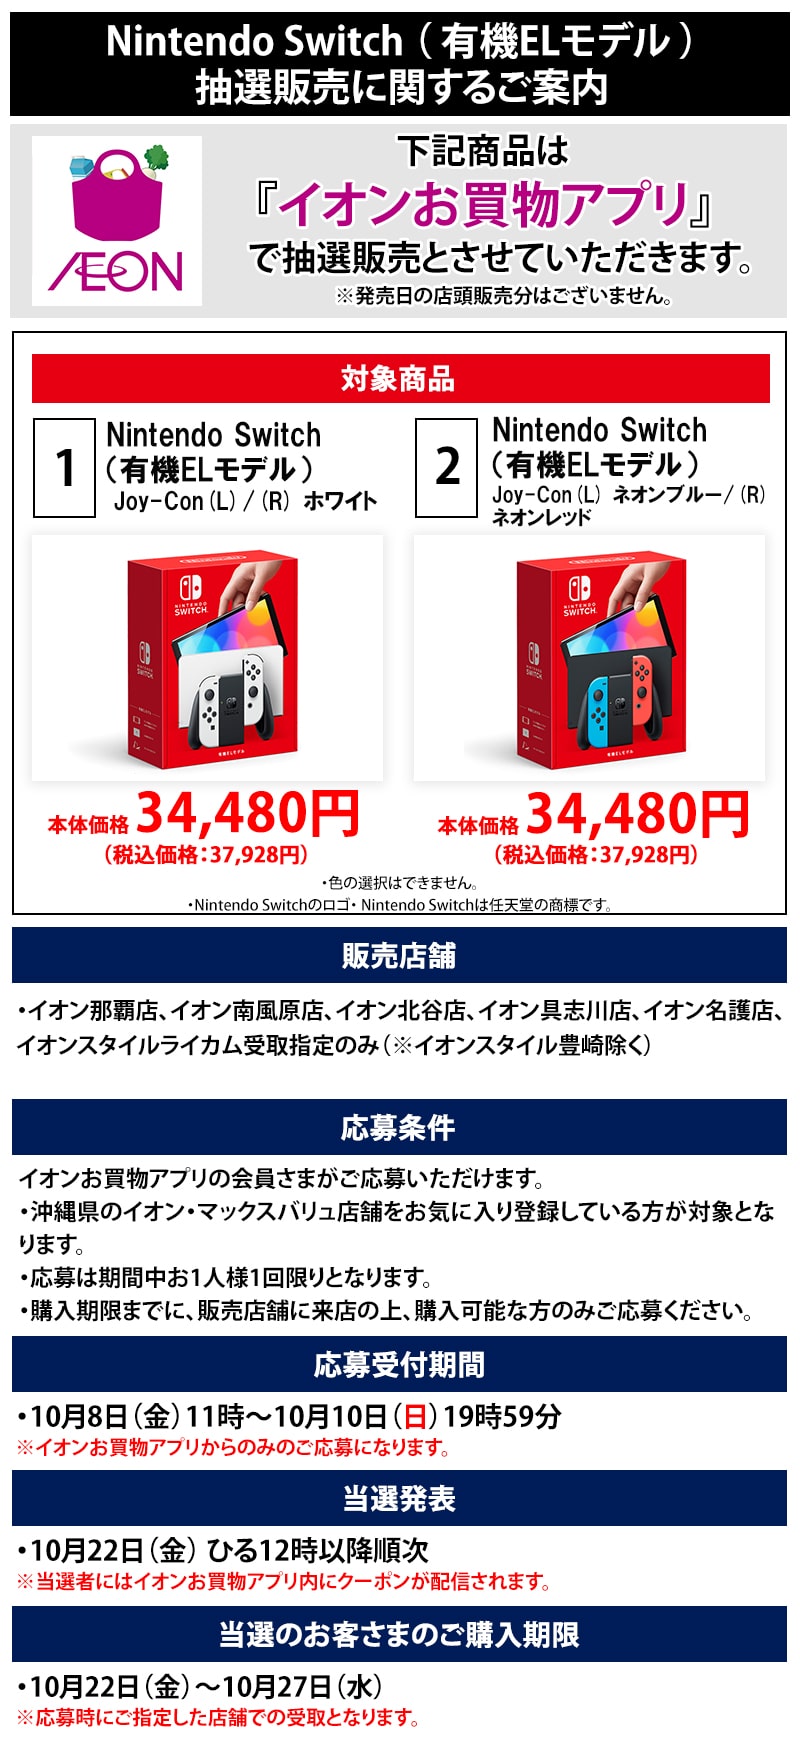 Nintendo Switch 有機elモデル 抽選販売に関するご案内 イオン琉球株式会社